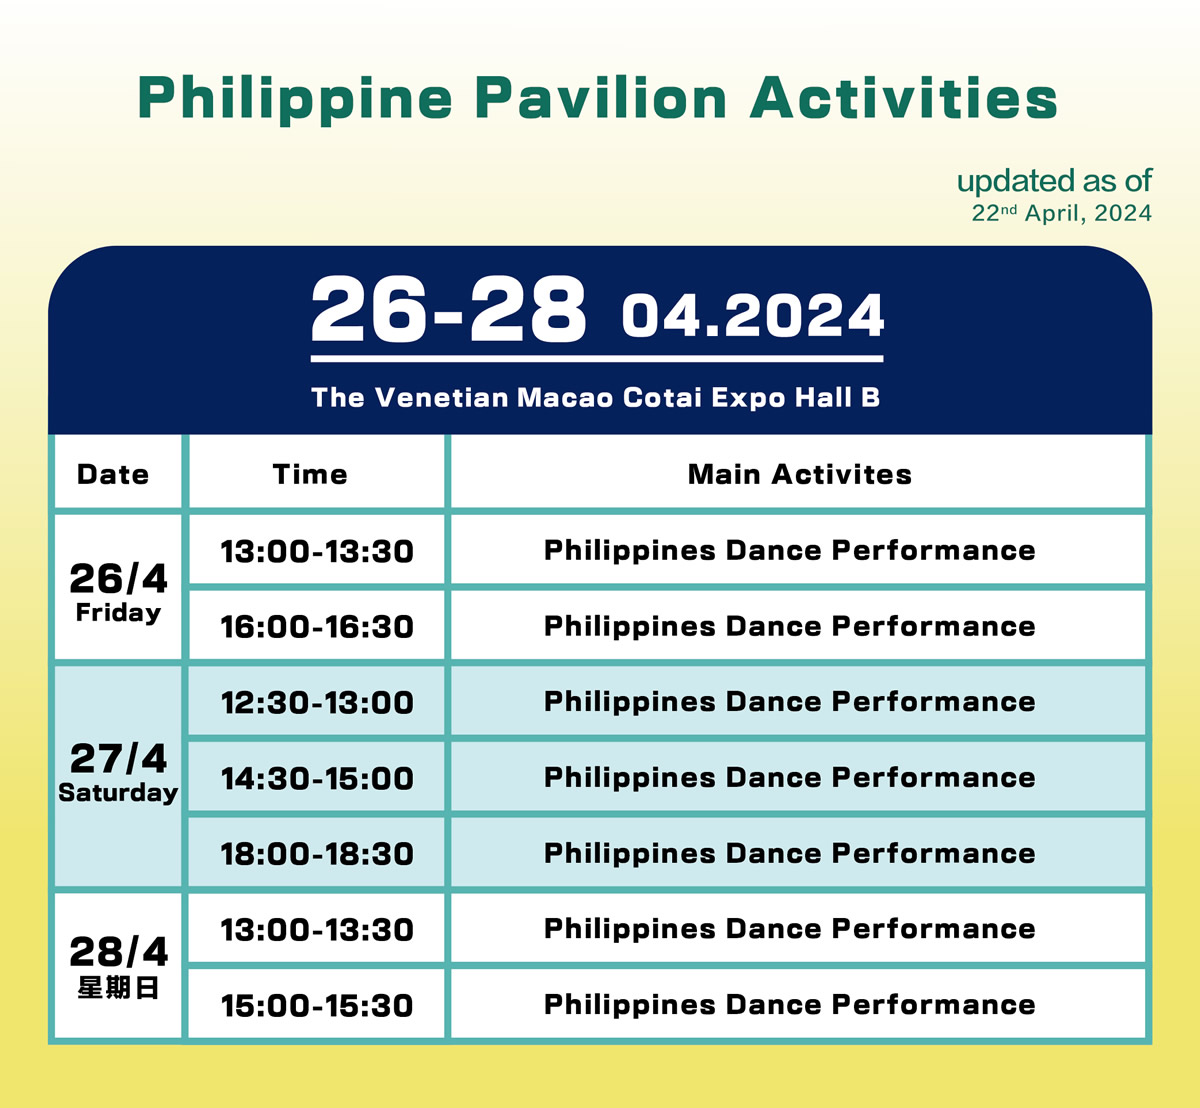 PhilippinePavilionActivities